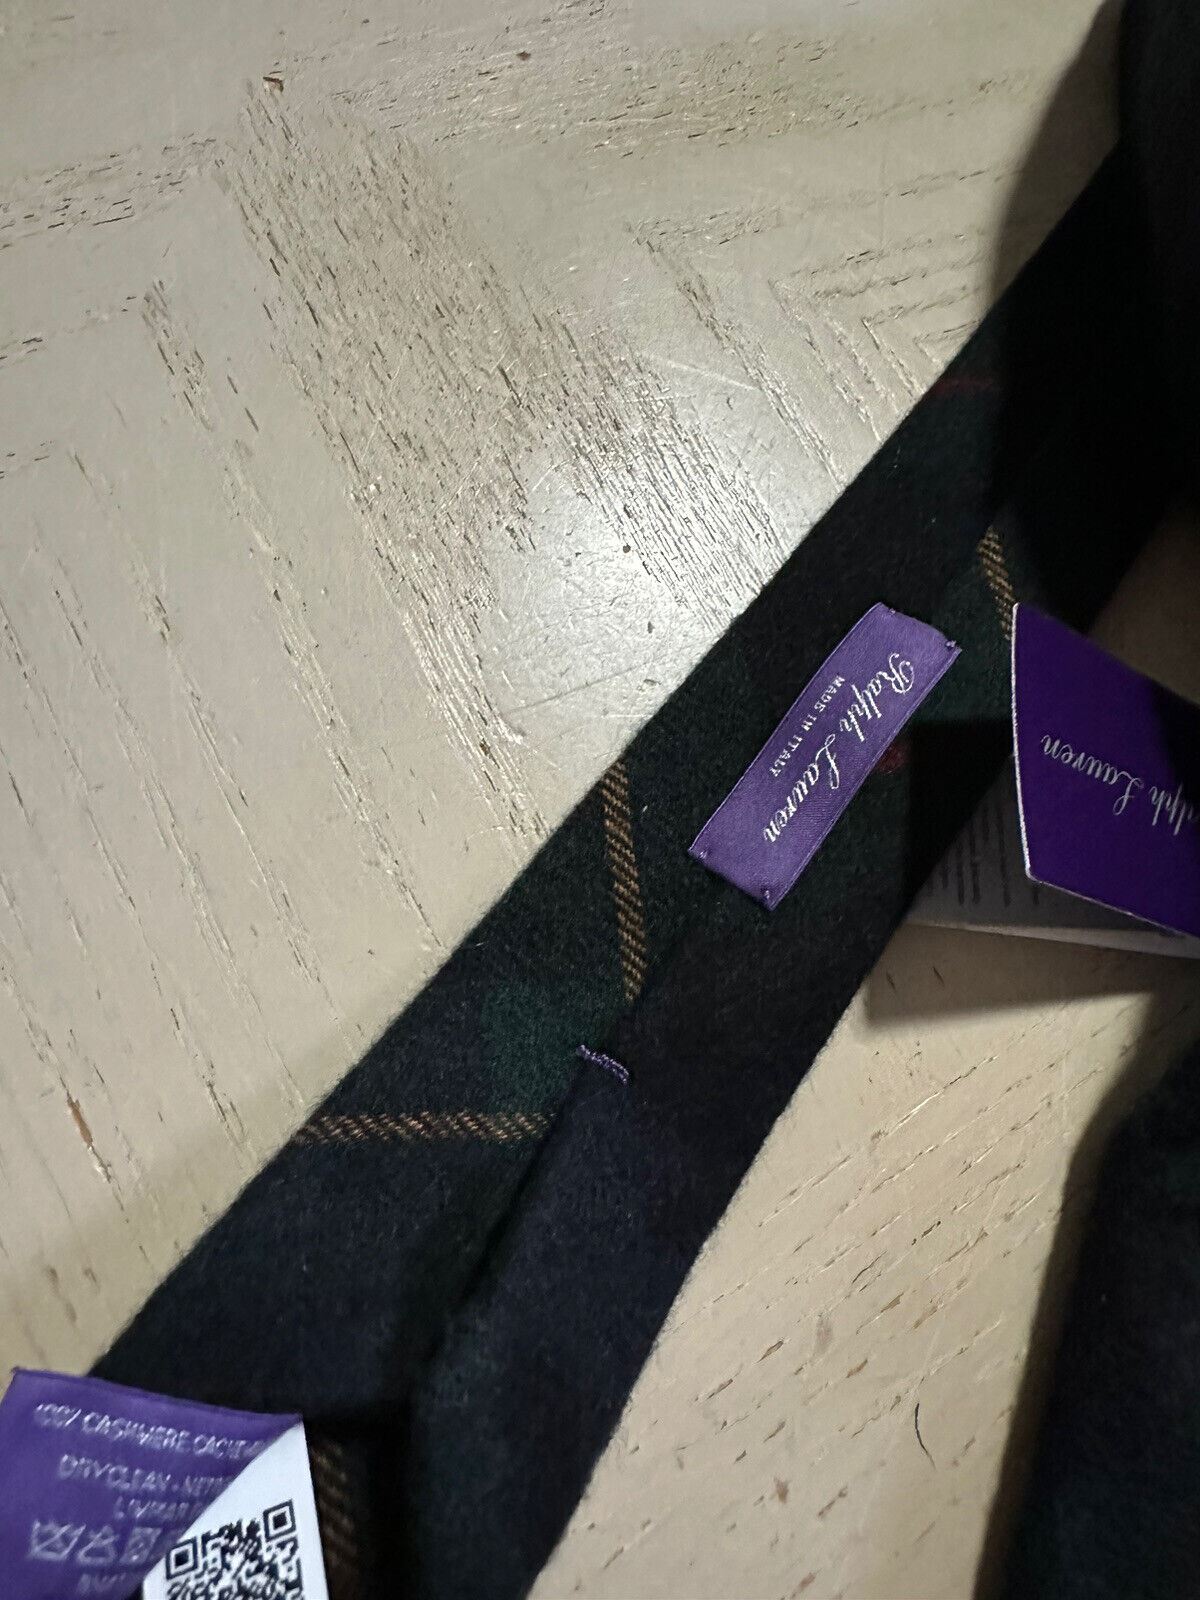 New $265 Ralph Lauren Purple Label Cashmere Neck Gr/Y/R Tie Hand made in Italy